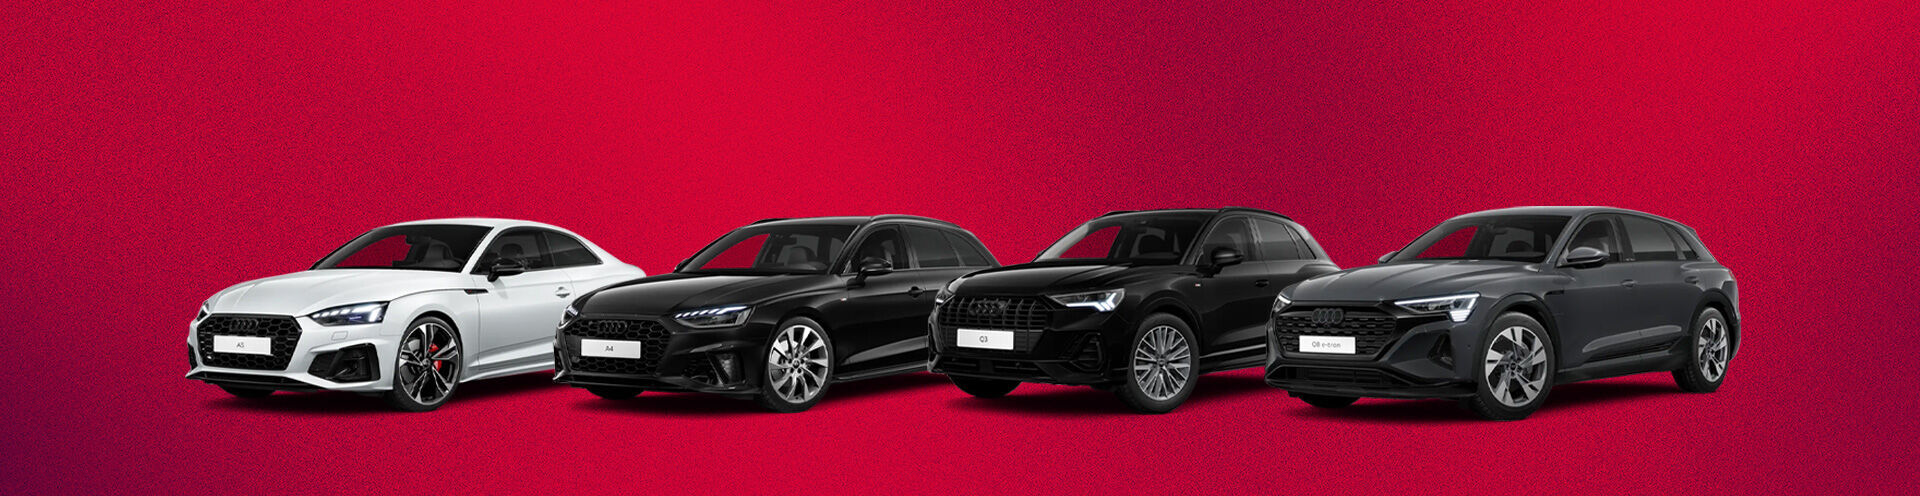 Audi Lagerwagen Kampagne